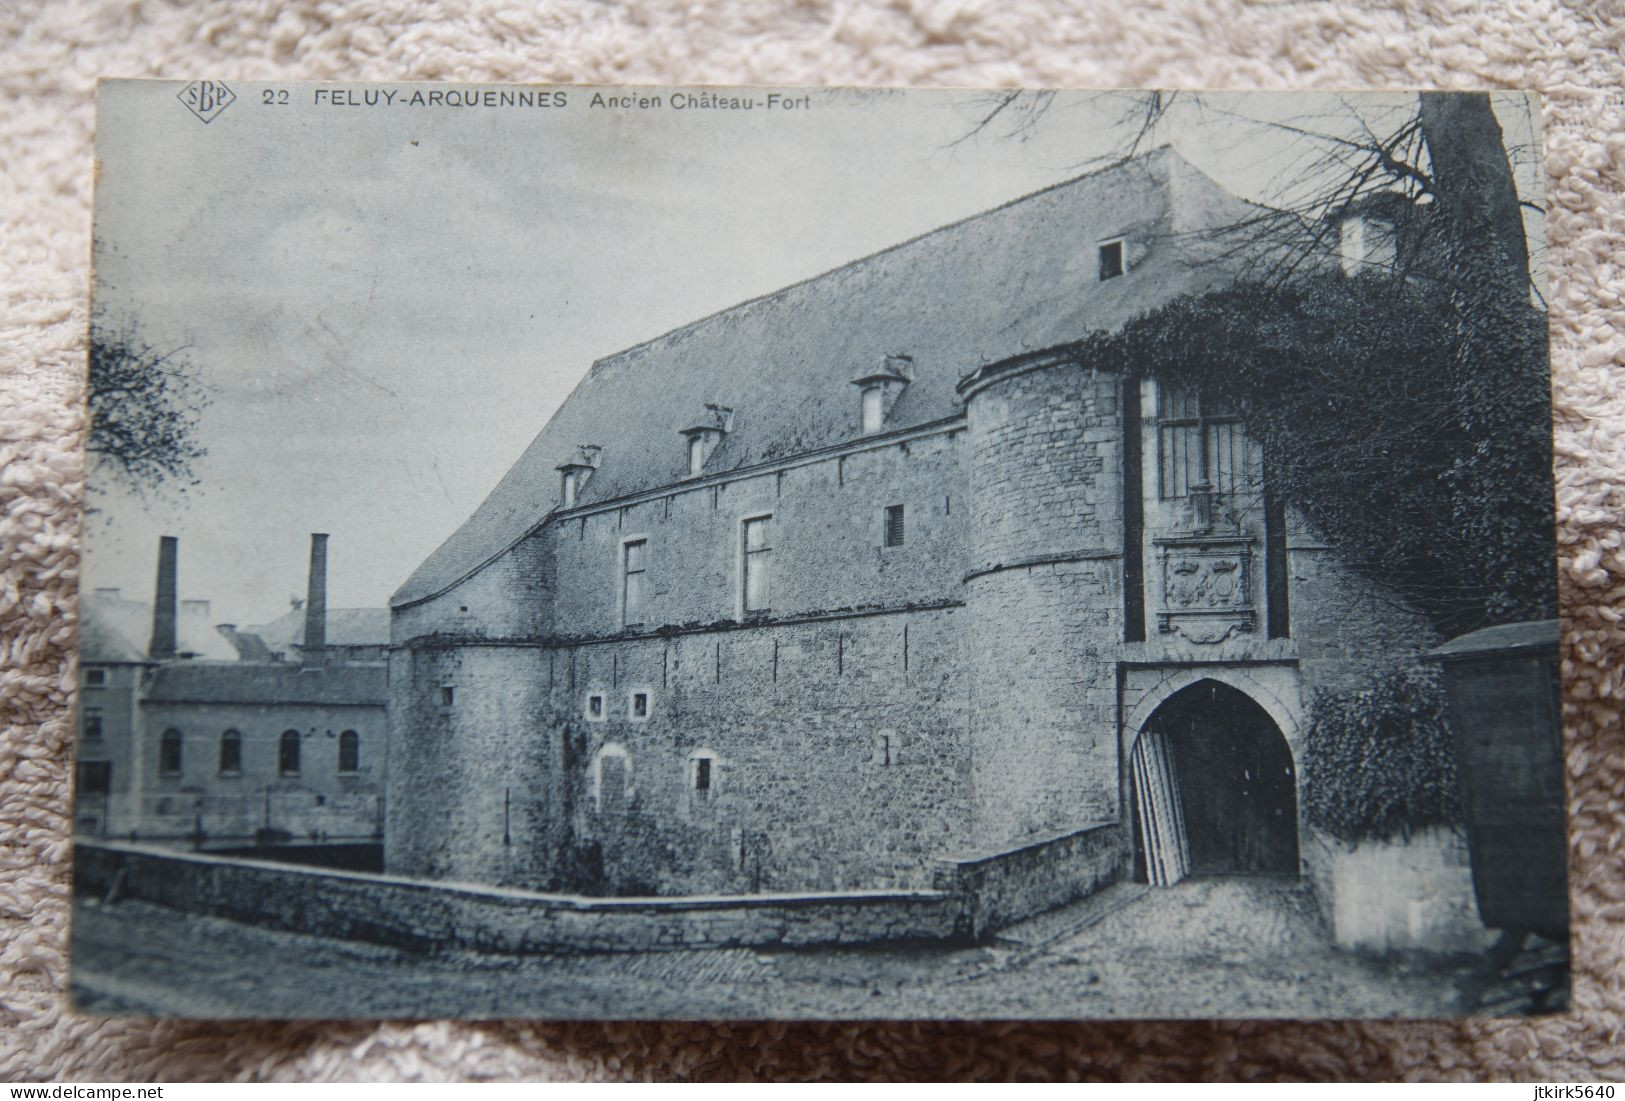 Feluy-Arquennes "Ancien Château-Fort" Edition SBP - Seneffe